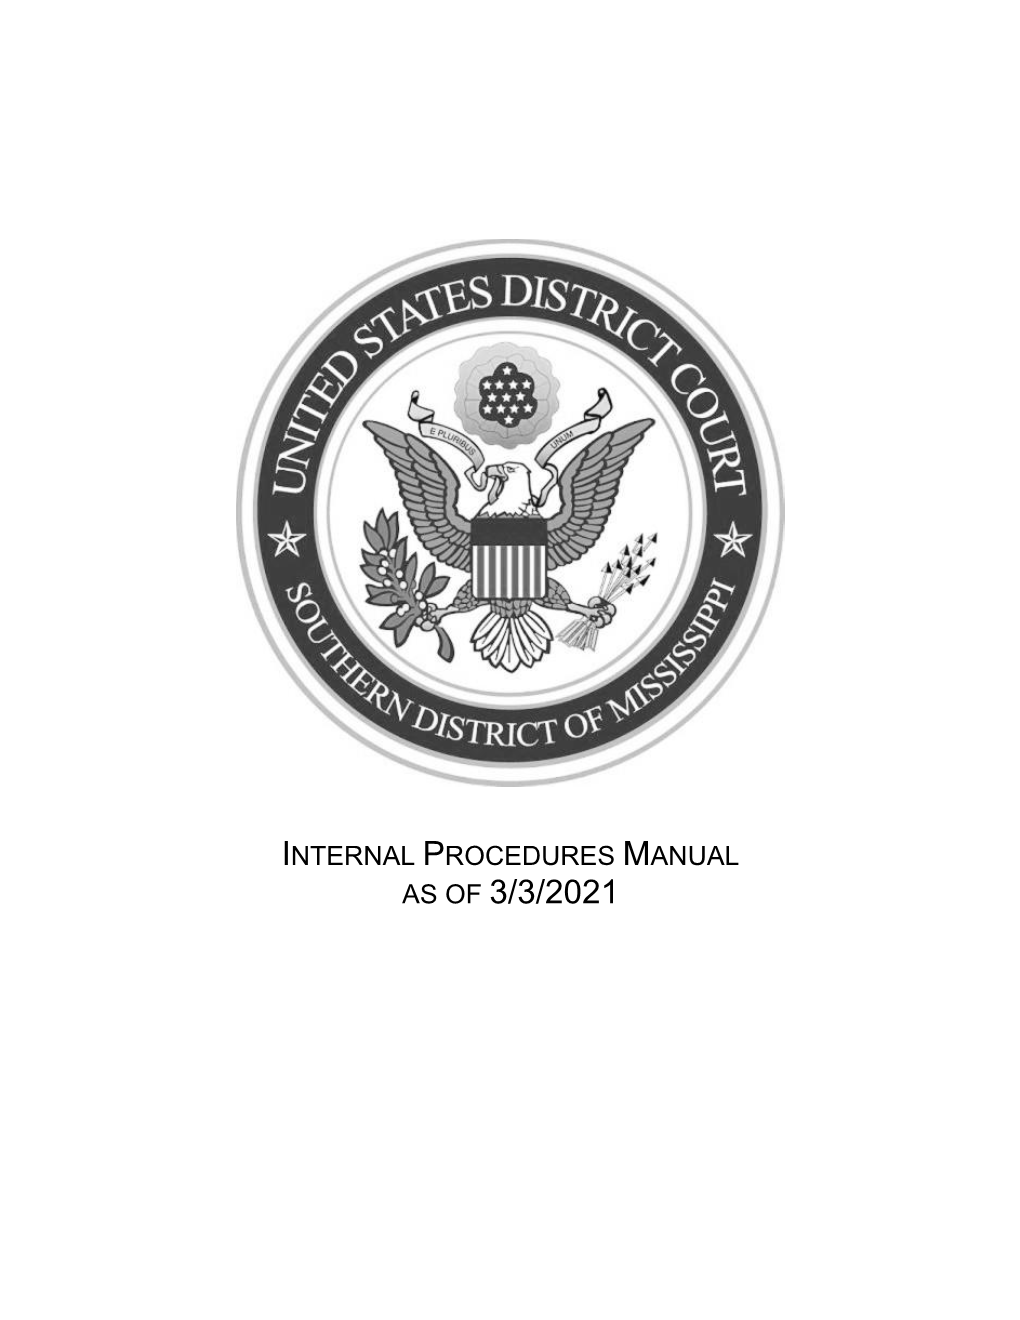 Internal Procedures Manual As of 3/3/2021